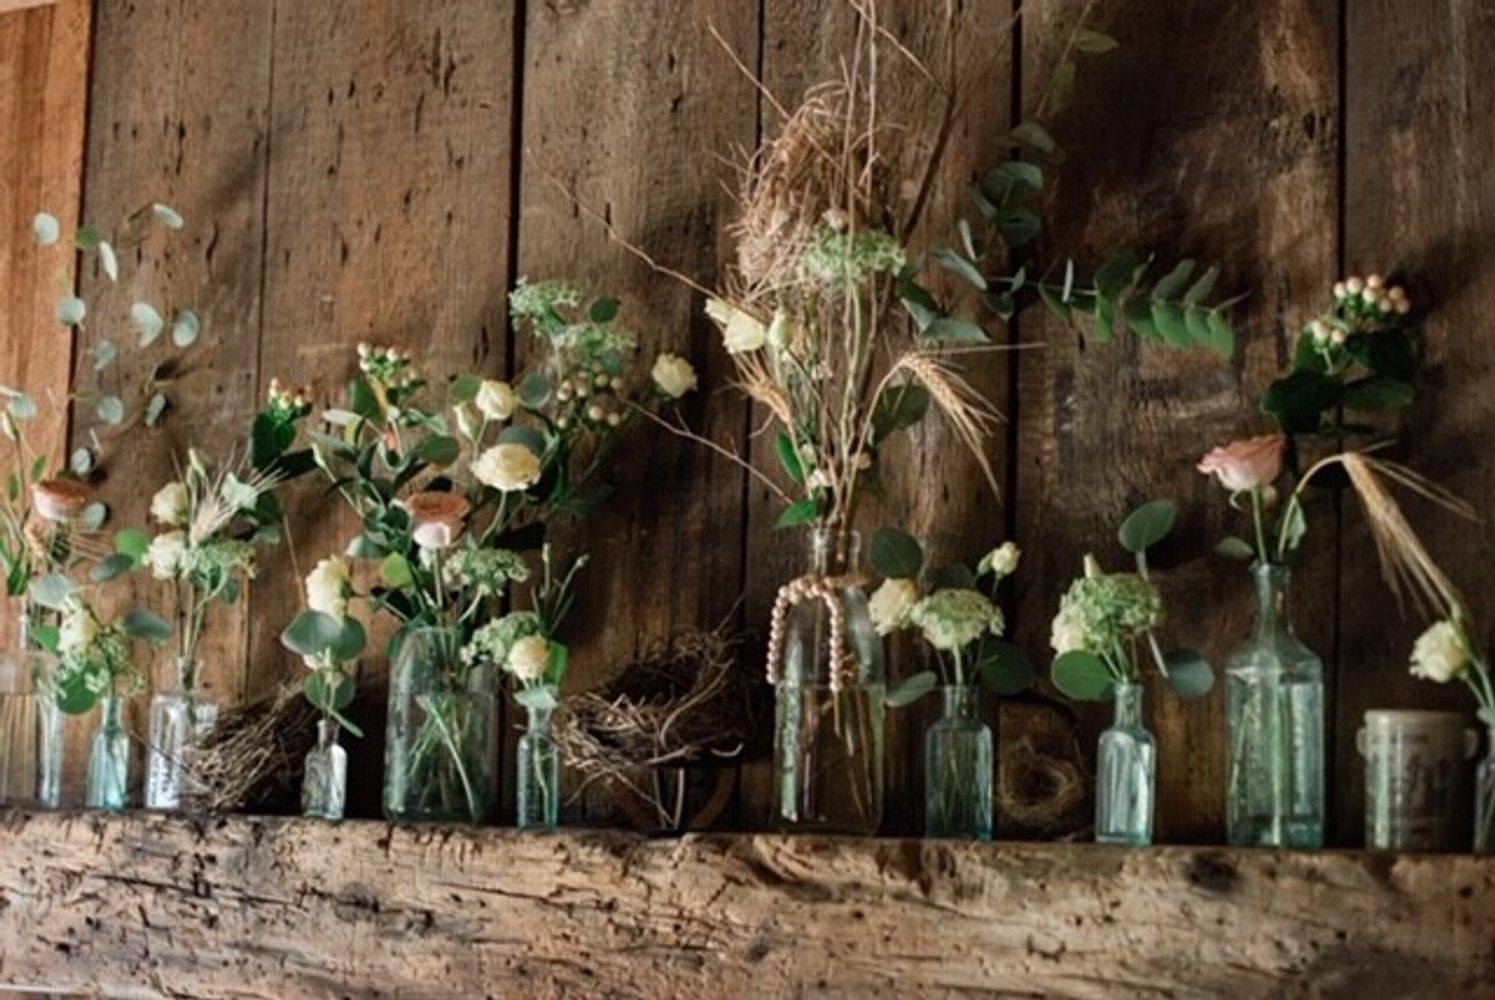 Flower arrangements in antique glass bottles